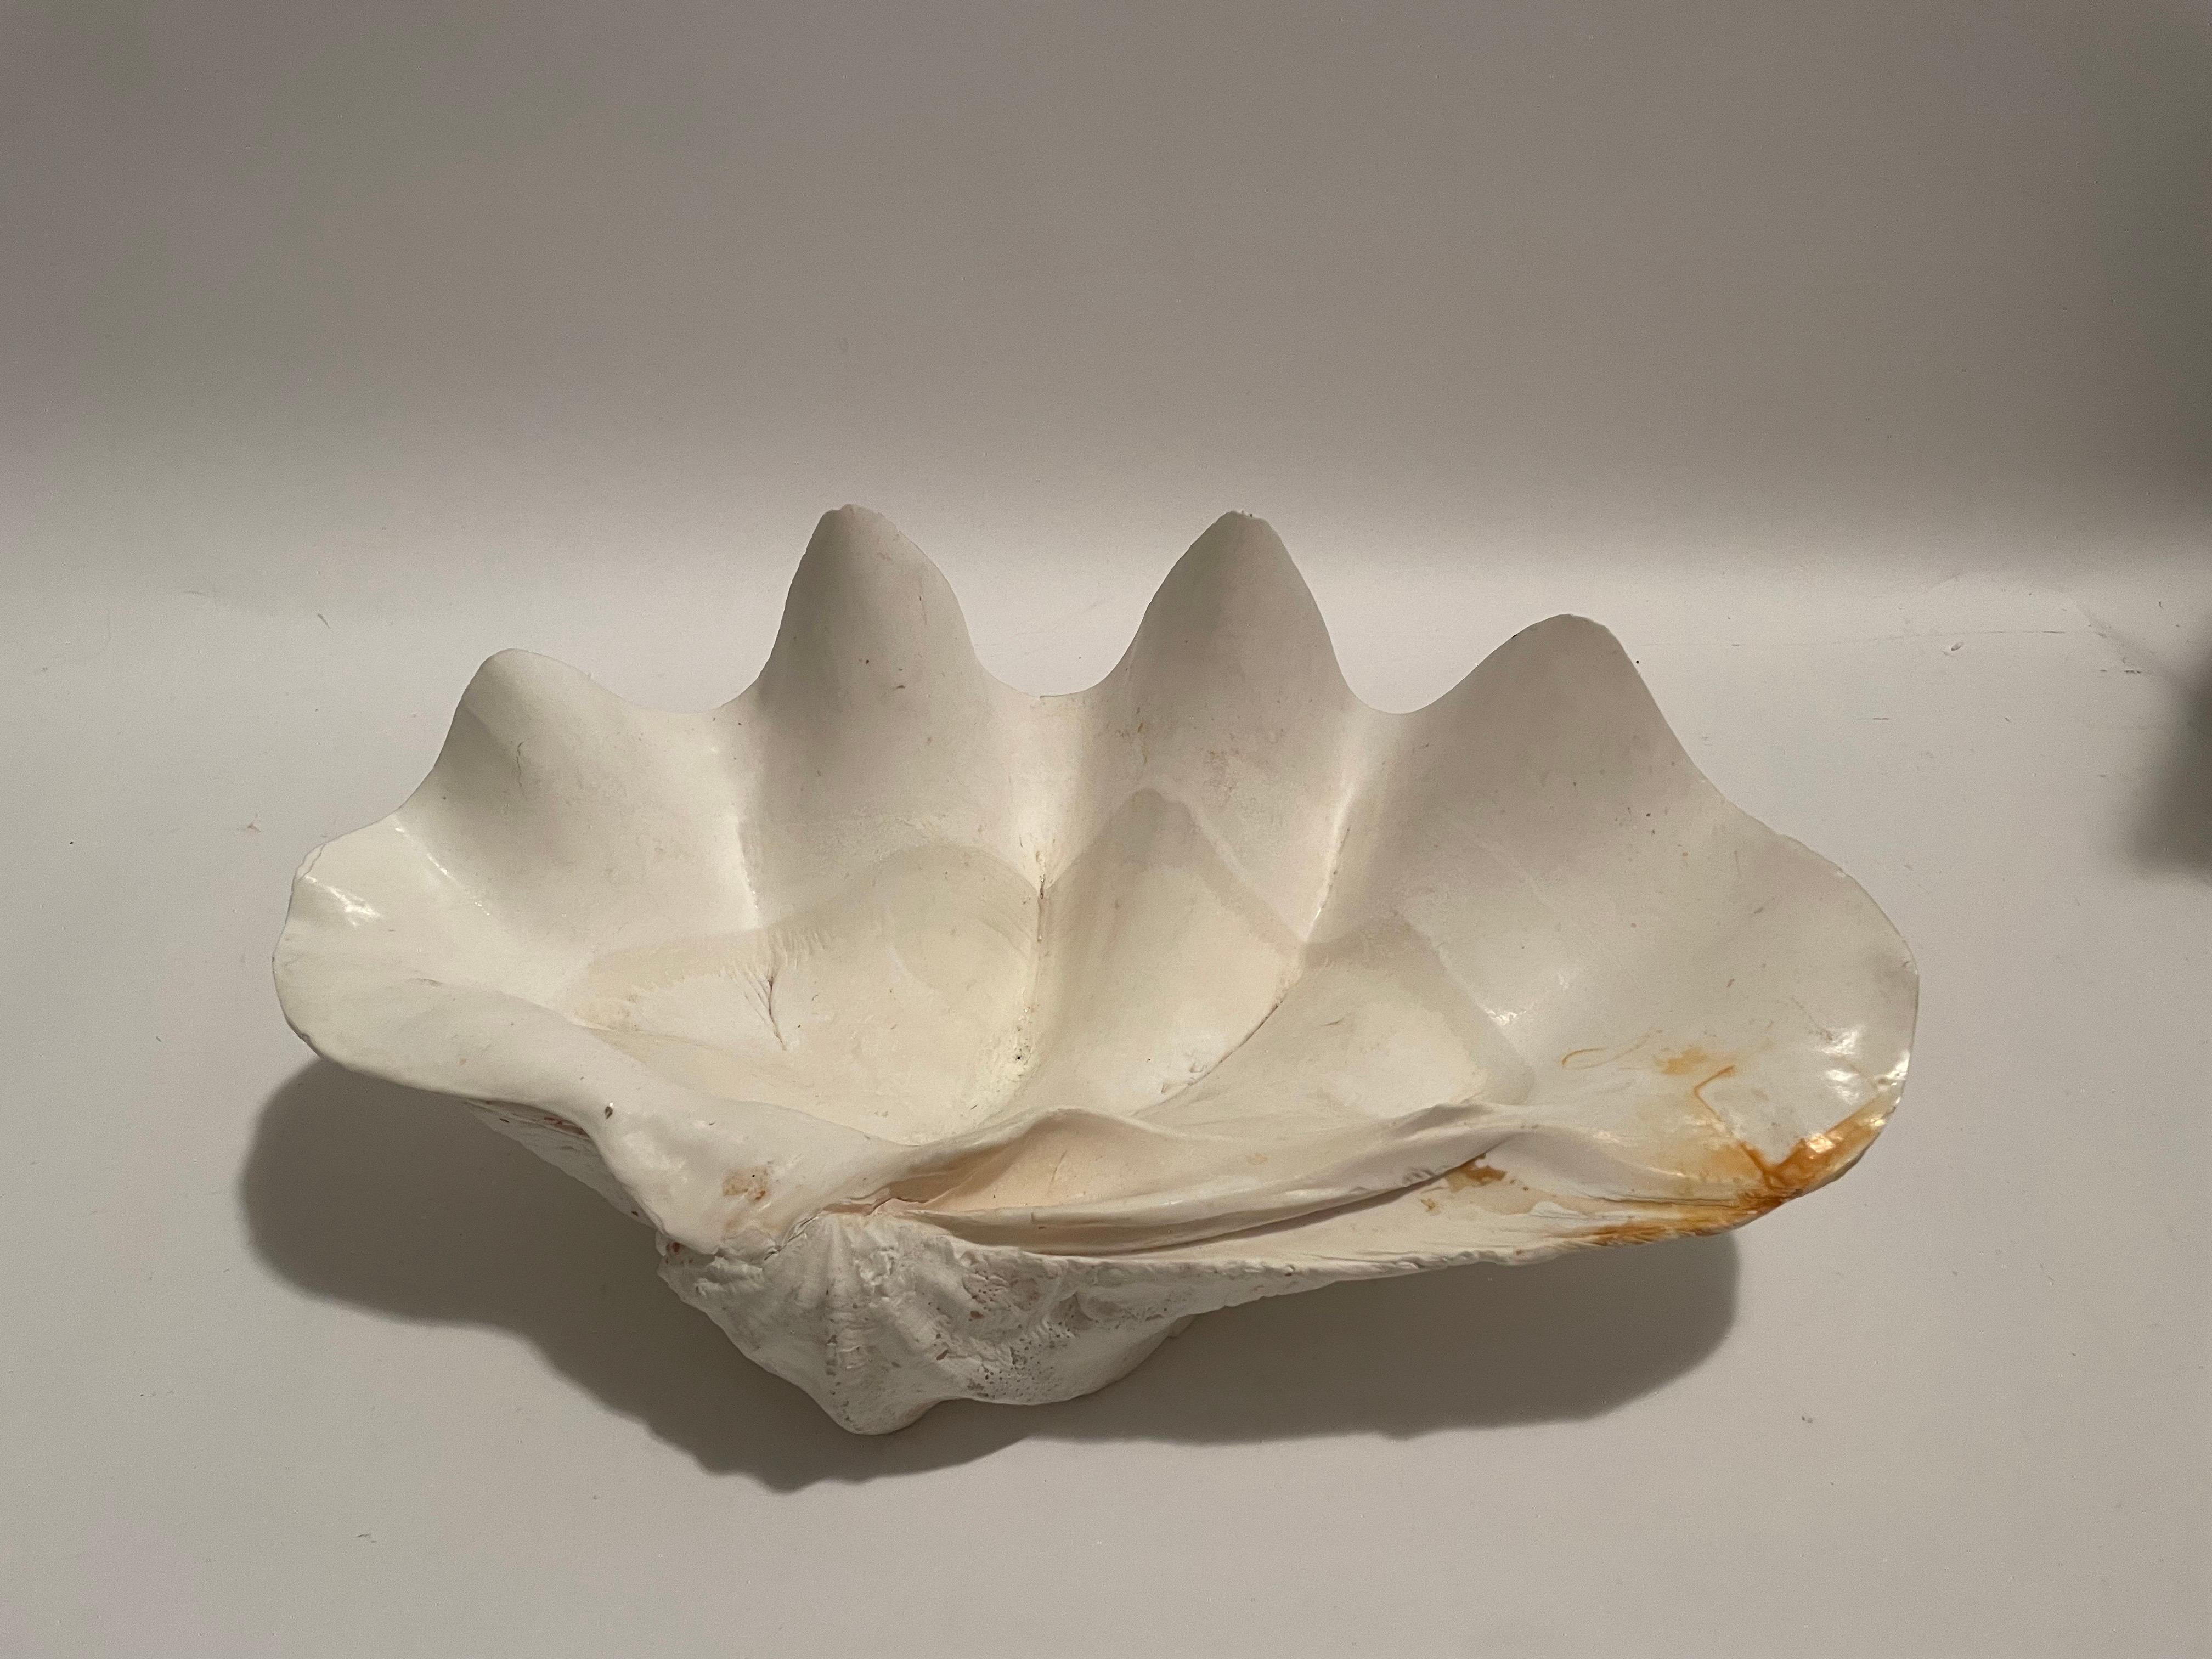 North American Gigas Tridacna clam shell 